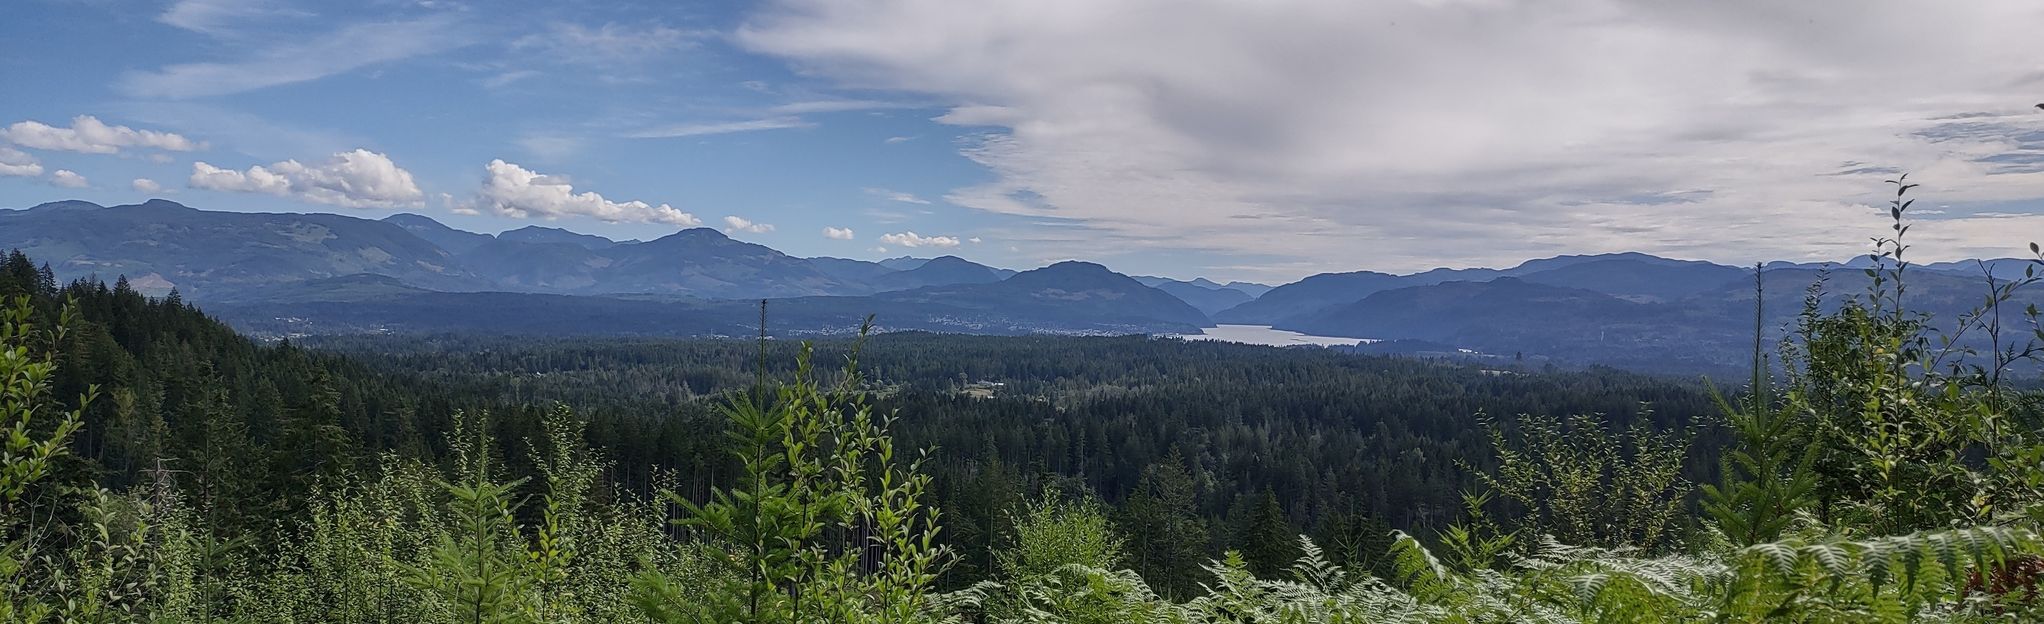 Mount Irwin via Log Train Trail Connector, British Columbia, Canada ...